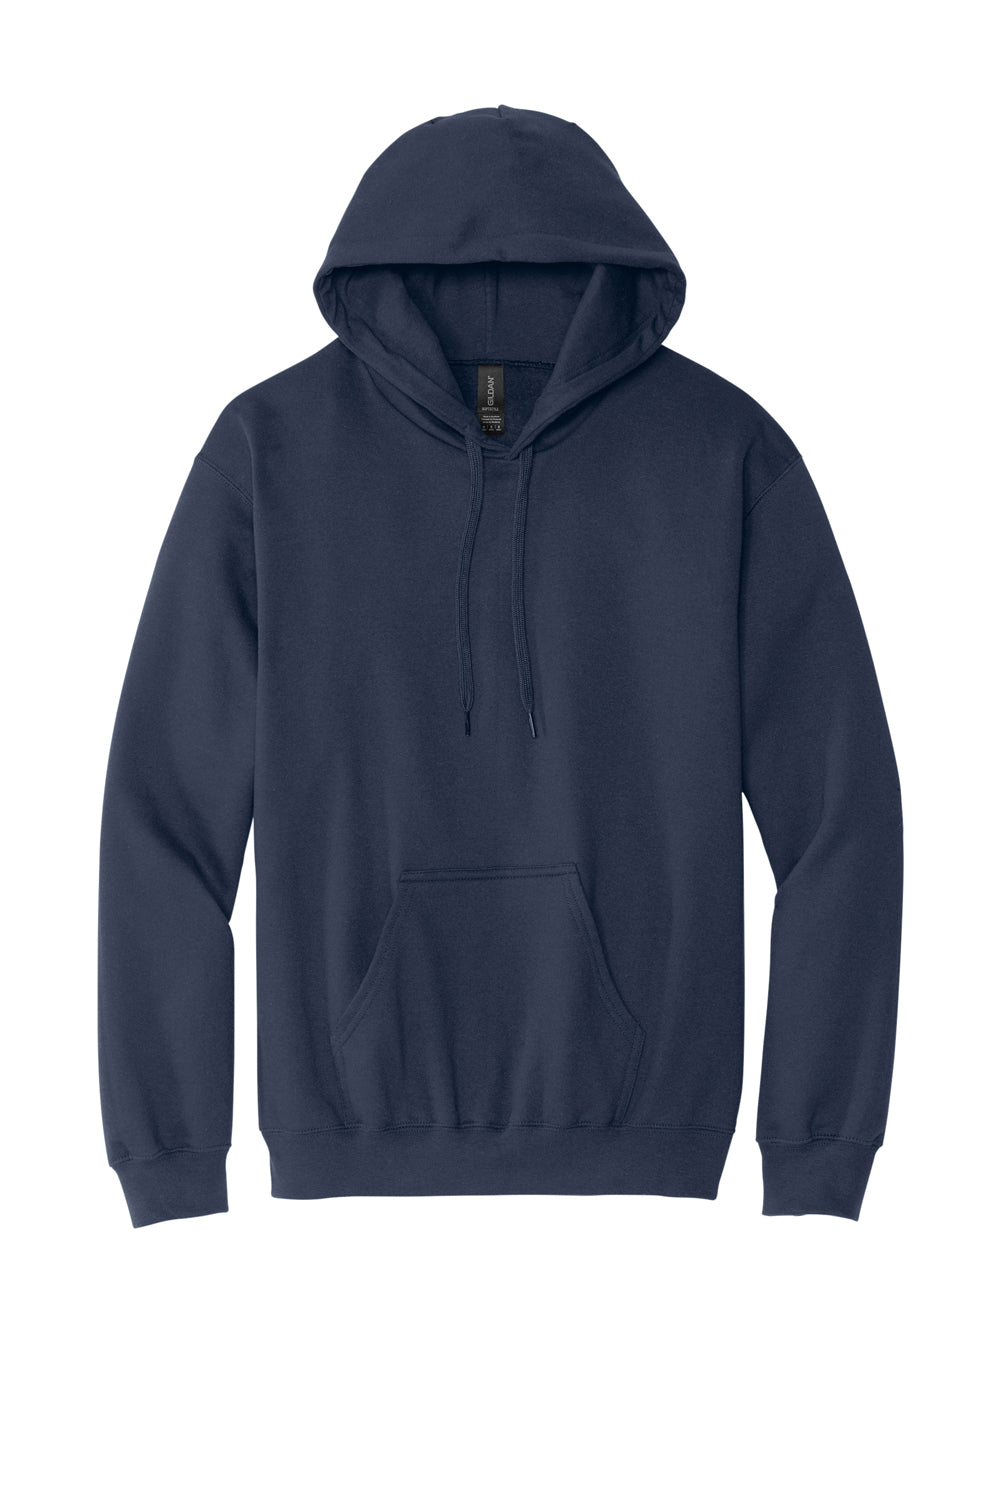 Gildan SF500 Softstyle Hooded Sweatshirt Hoodie Navy Blue Flat Front